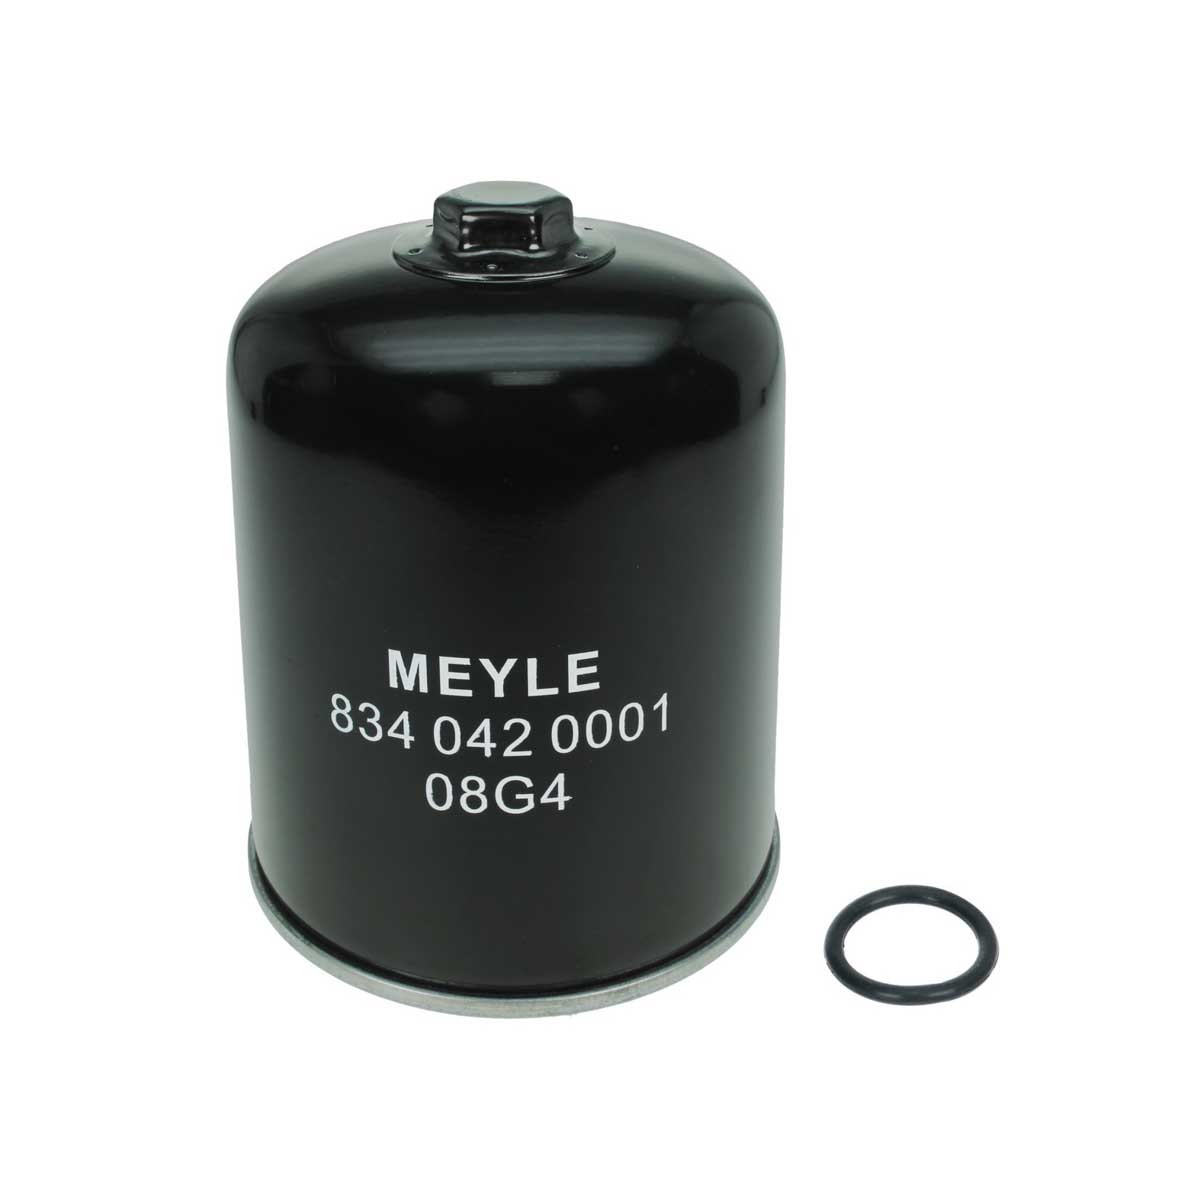 MBX0213 MEYLE 8340420001 Air Dryer, compressed-air system 50.01.843.522